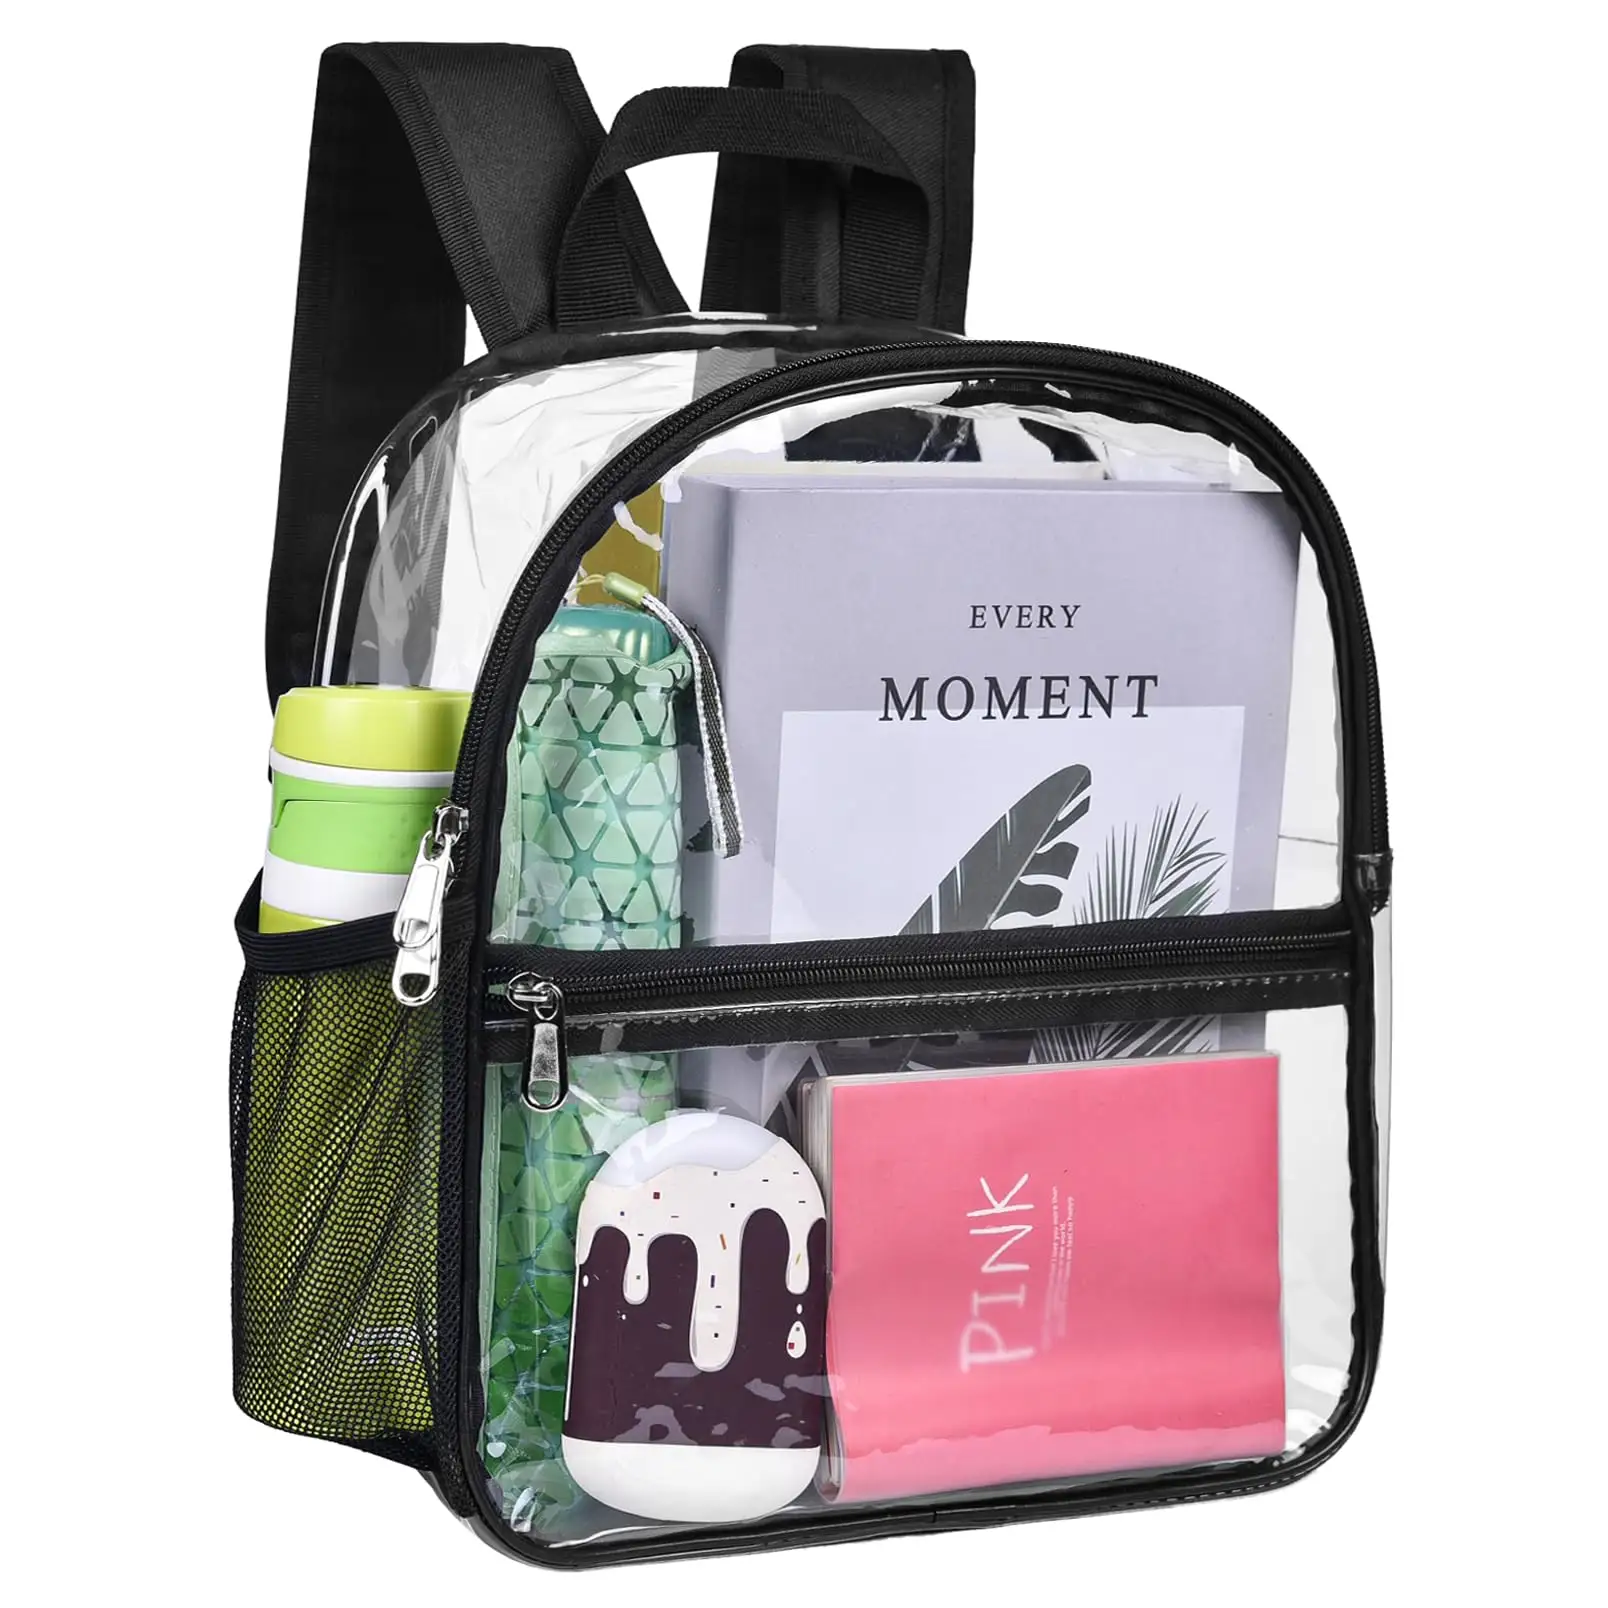 OEM ODM Custom LOGO Heavy Duty Back Pack Stadium Approved Clear Pvc Transparent Backpack School bag